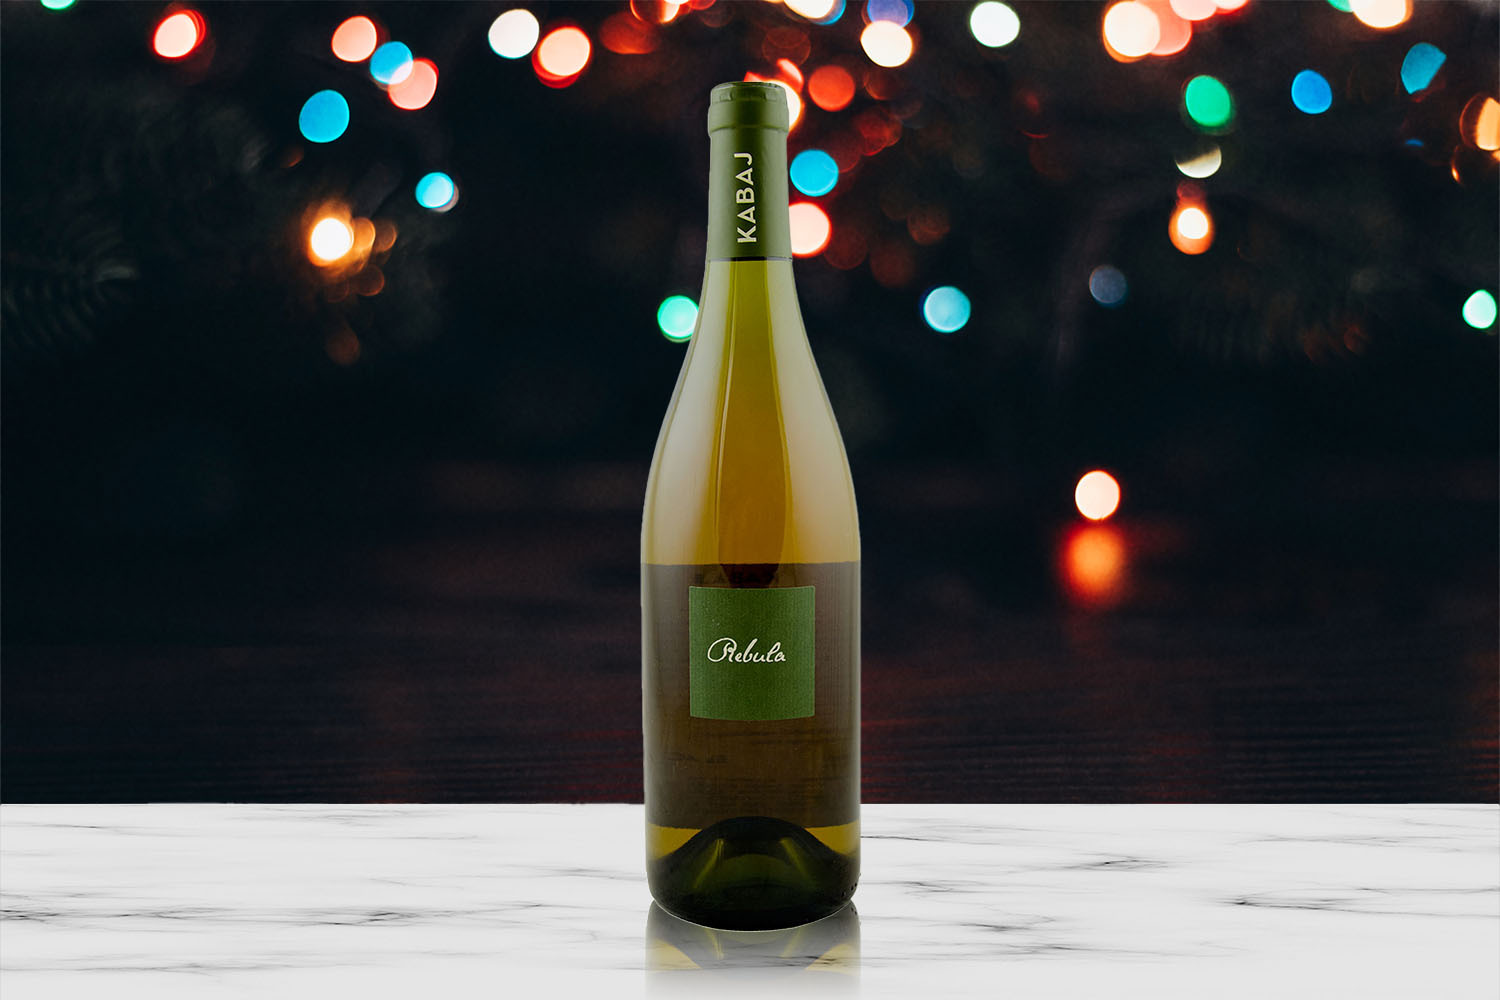 Kabaj Rebula wine in front of holiday lights